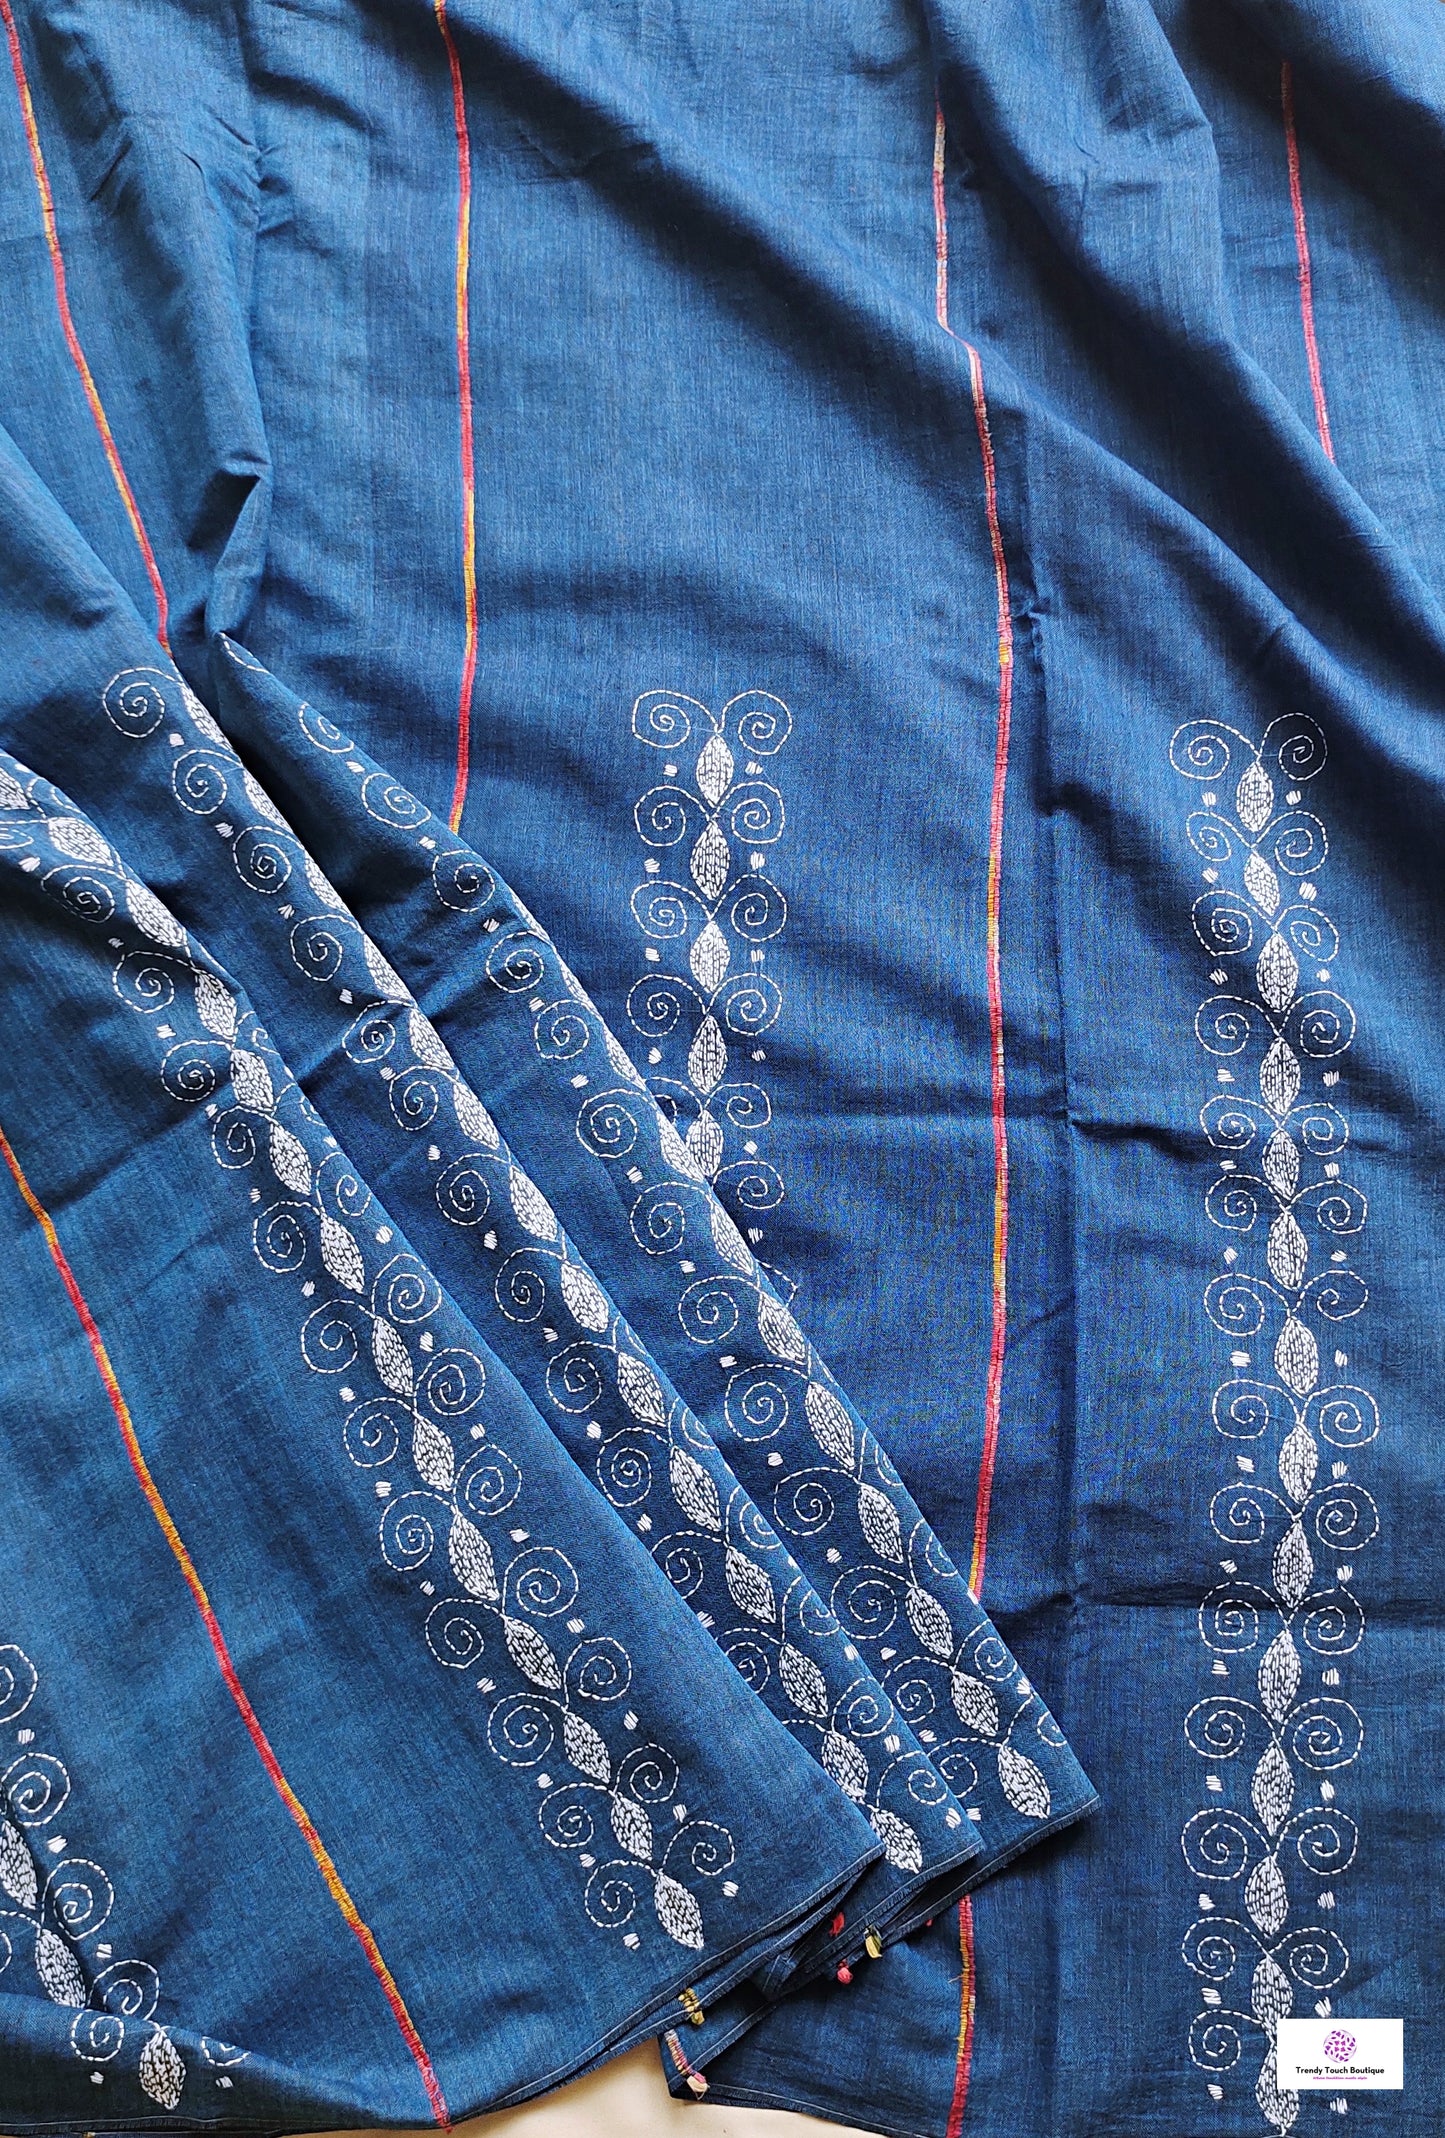 blue and white kantha handembroidered designer khesh khadi cotton handloom saree best summer fabric with blouse piece best price wedding functions